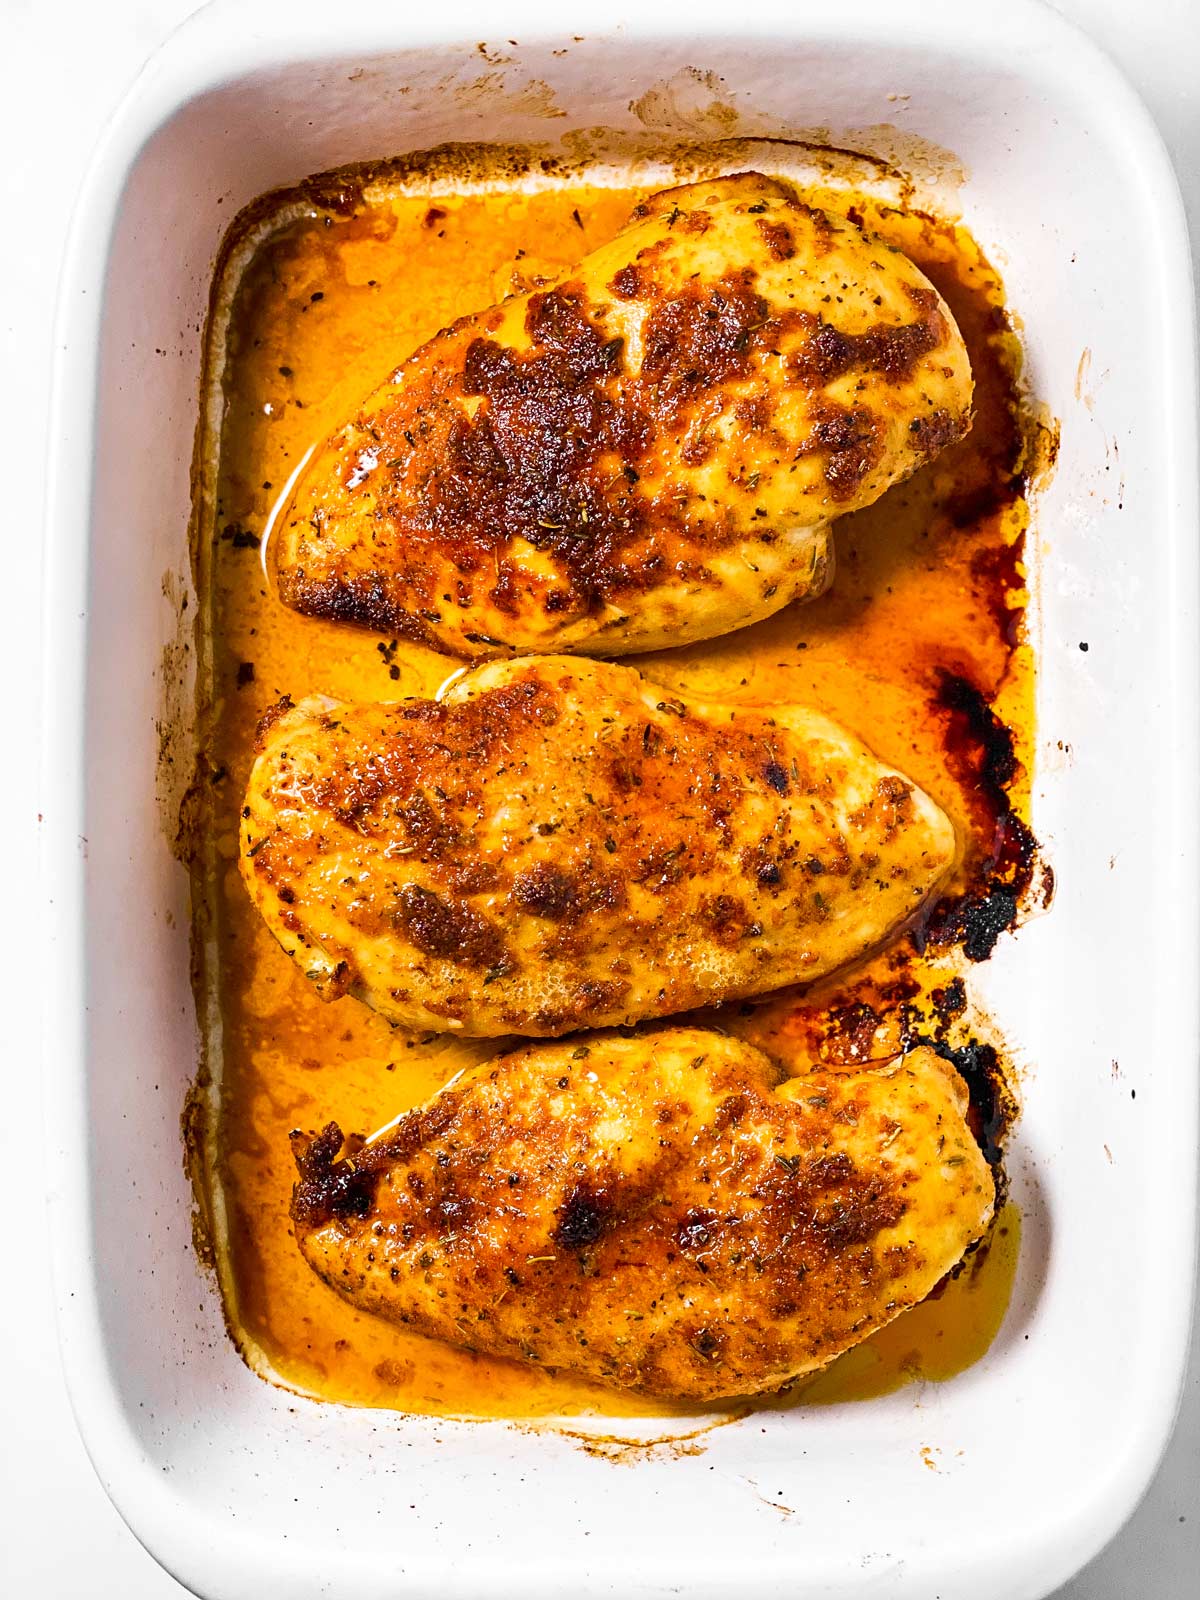 three seasoned, baked chicken breasts in white casserole dish